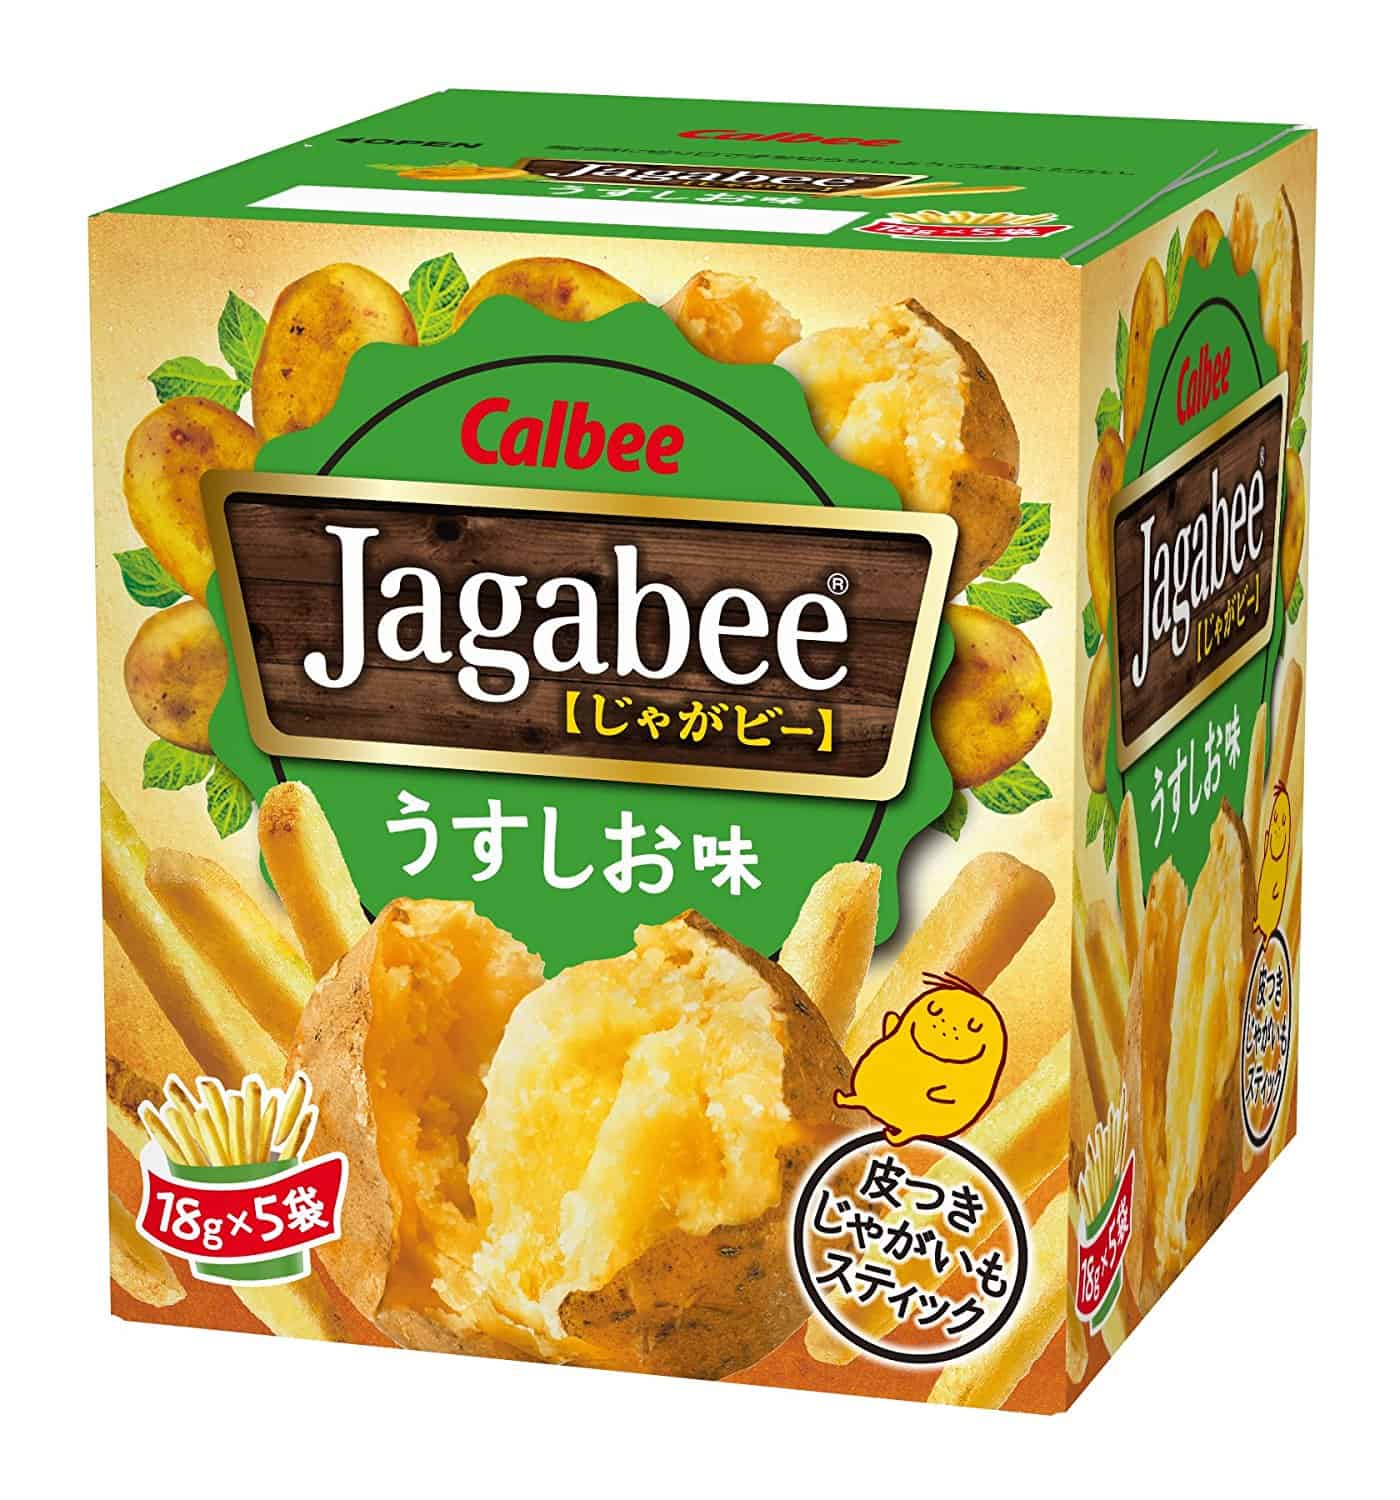 Jagabee potato snack from Japan